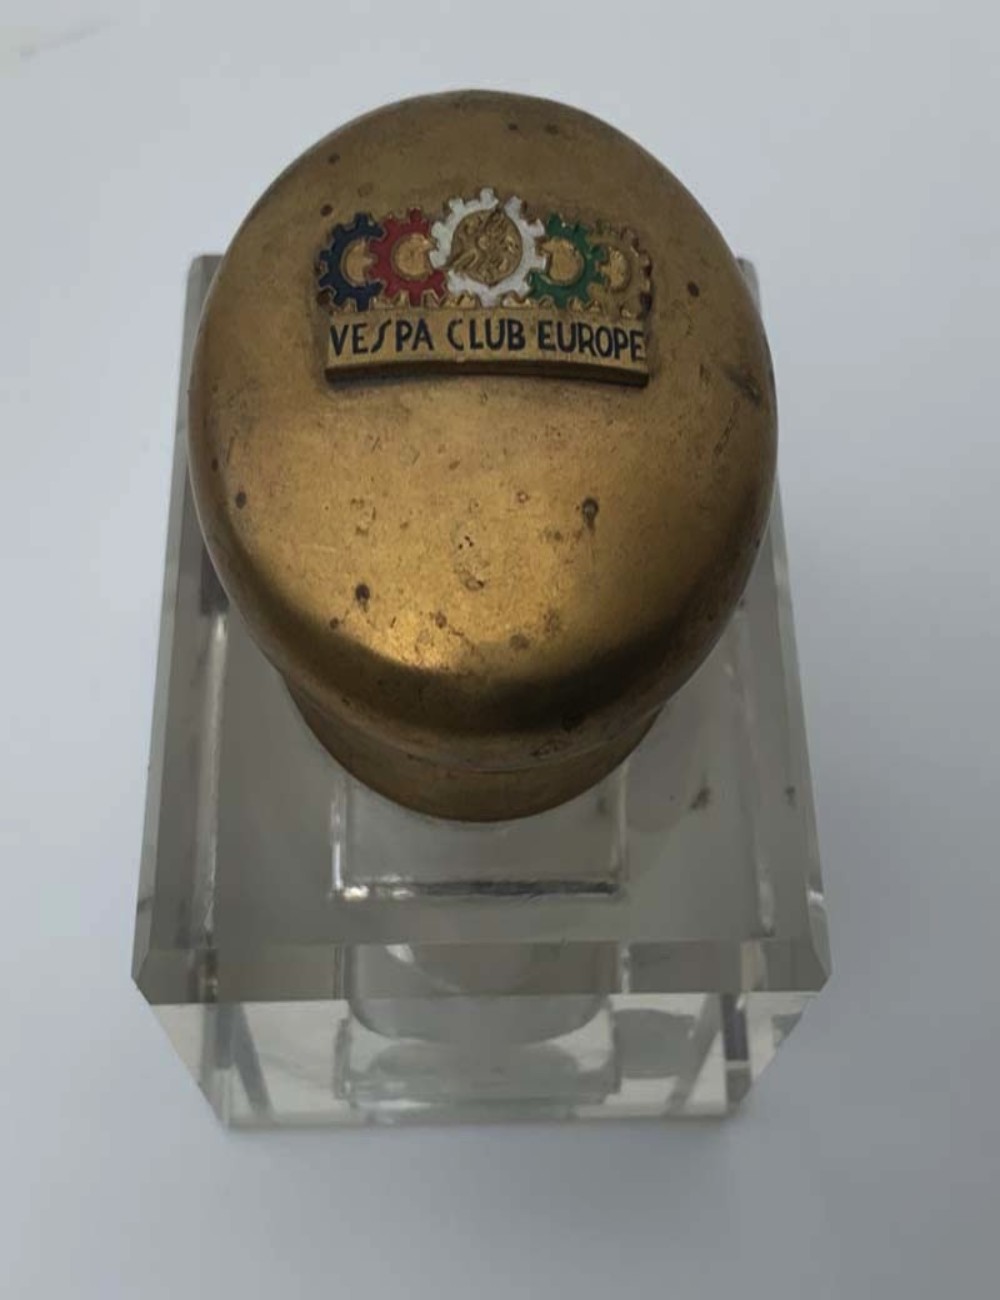 Porta calamaio Vespa Club Europe. Dimensioni  7 cm x 6 cm